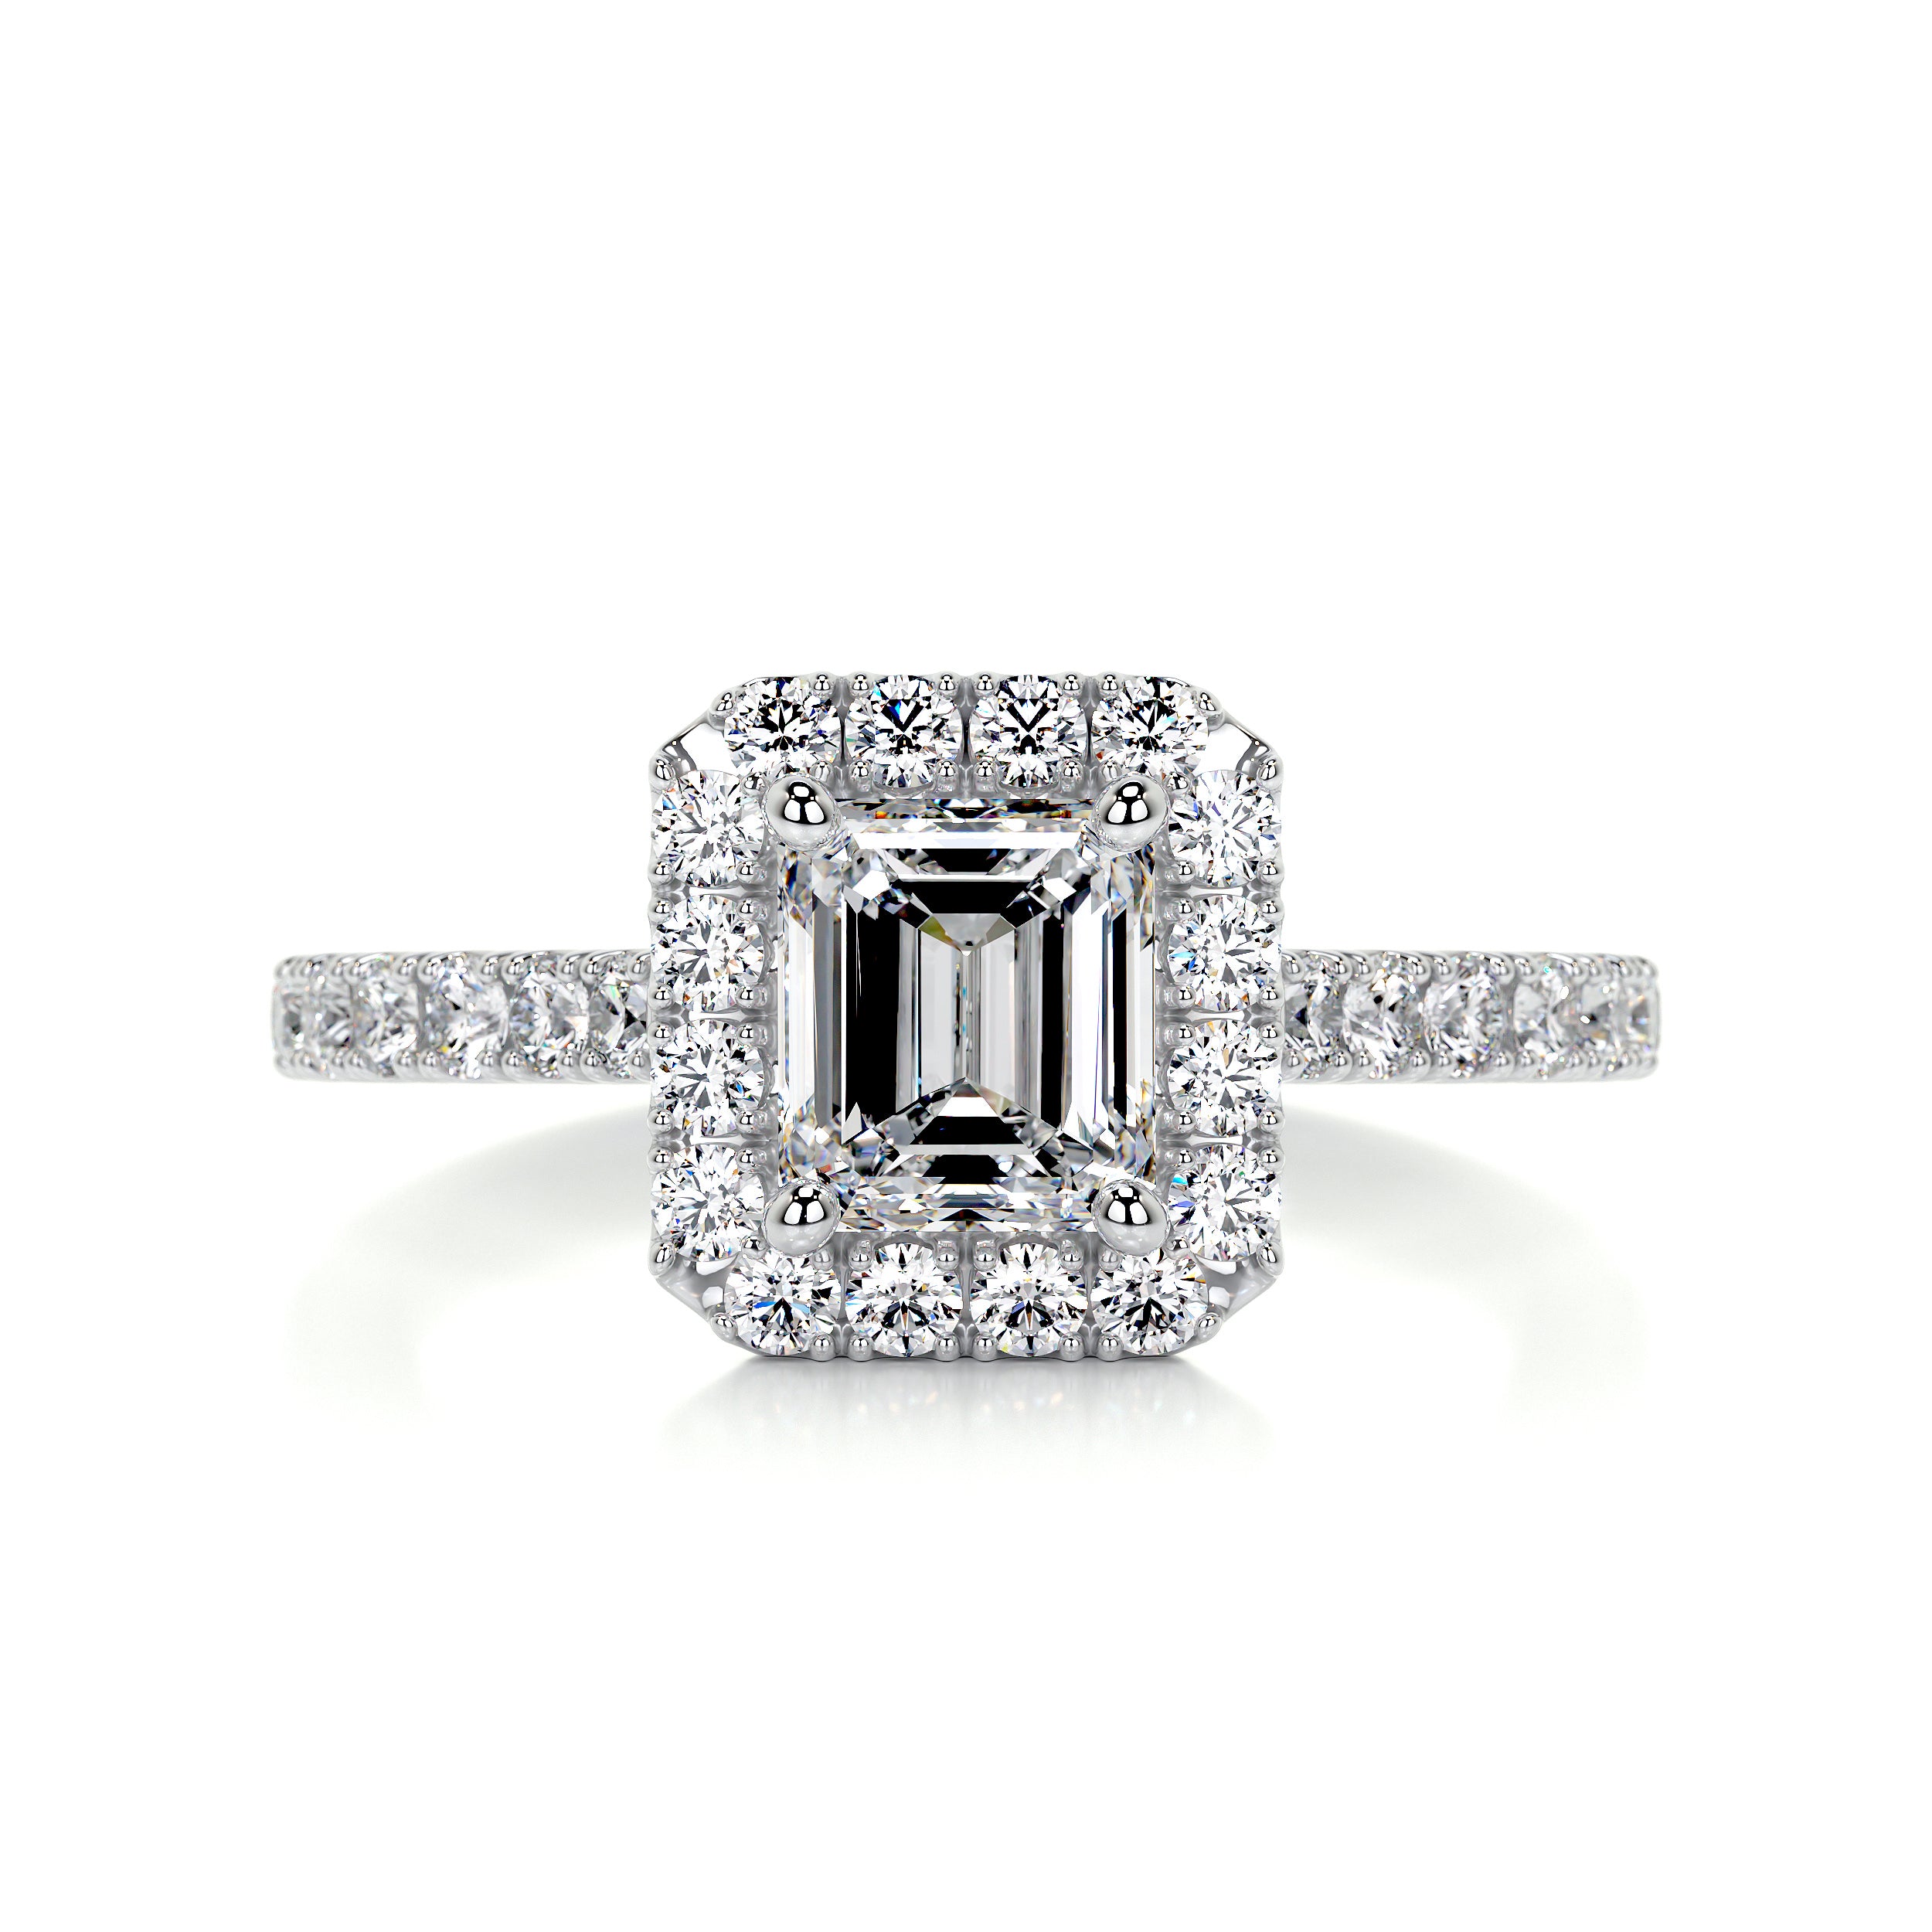 Zoey Diamond Engagement Ring   (1.5 Carat) -14K White Gold